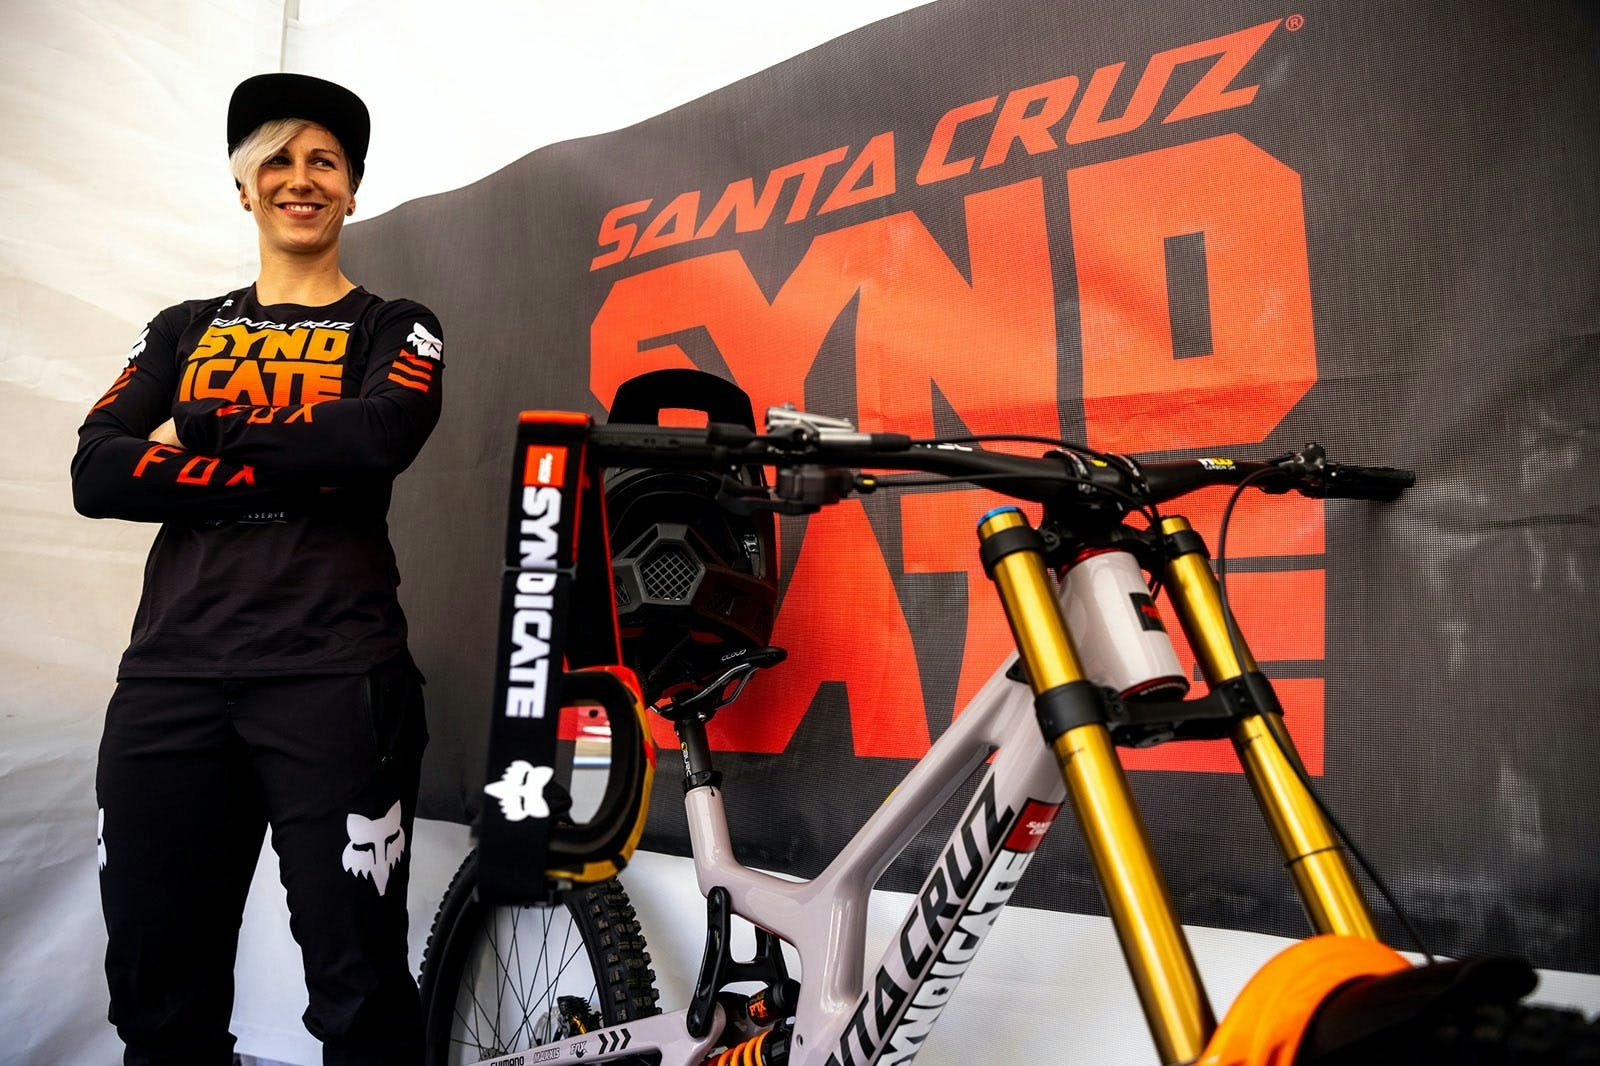 Nina Hoffmann and her custom painted Santa Cruz V10 Downhill Bike